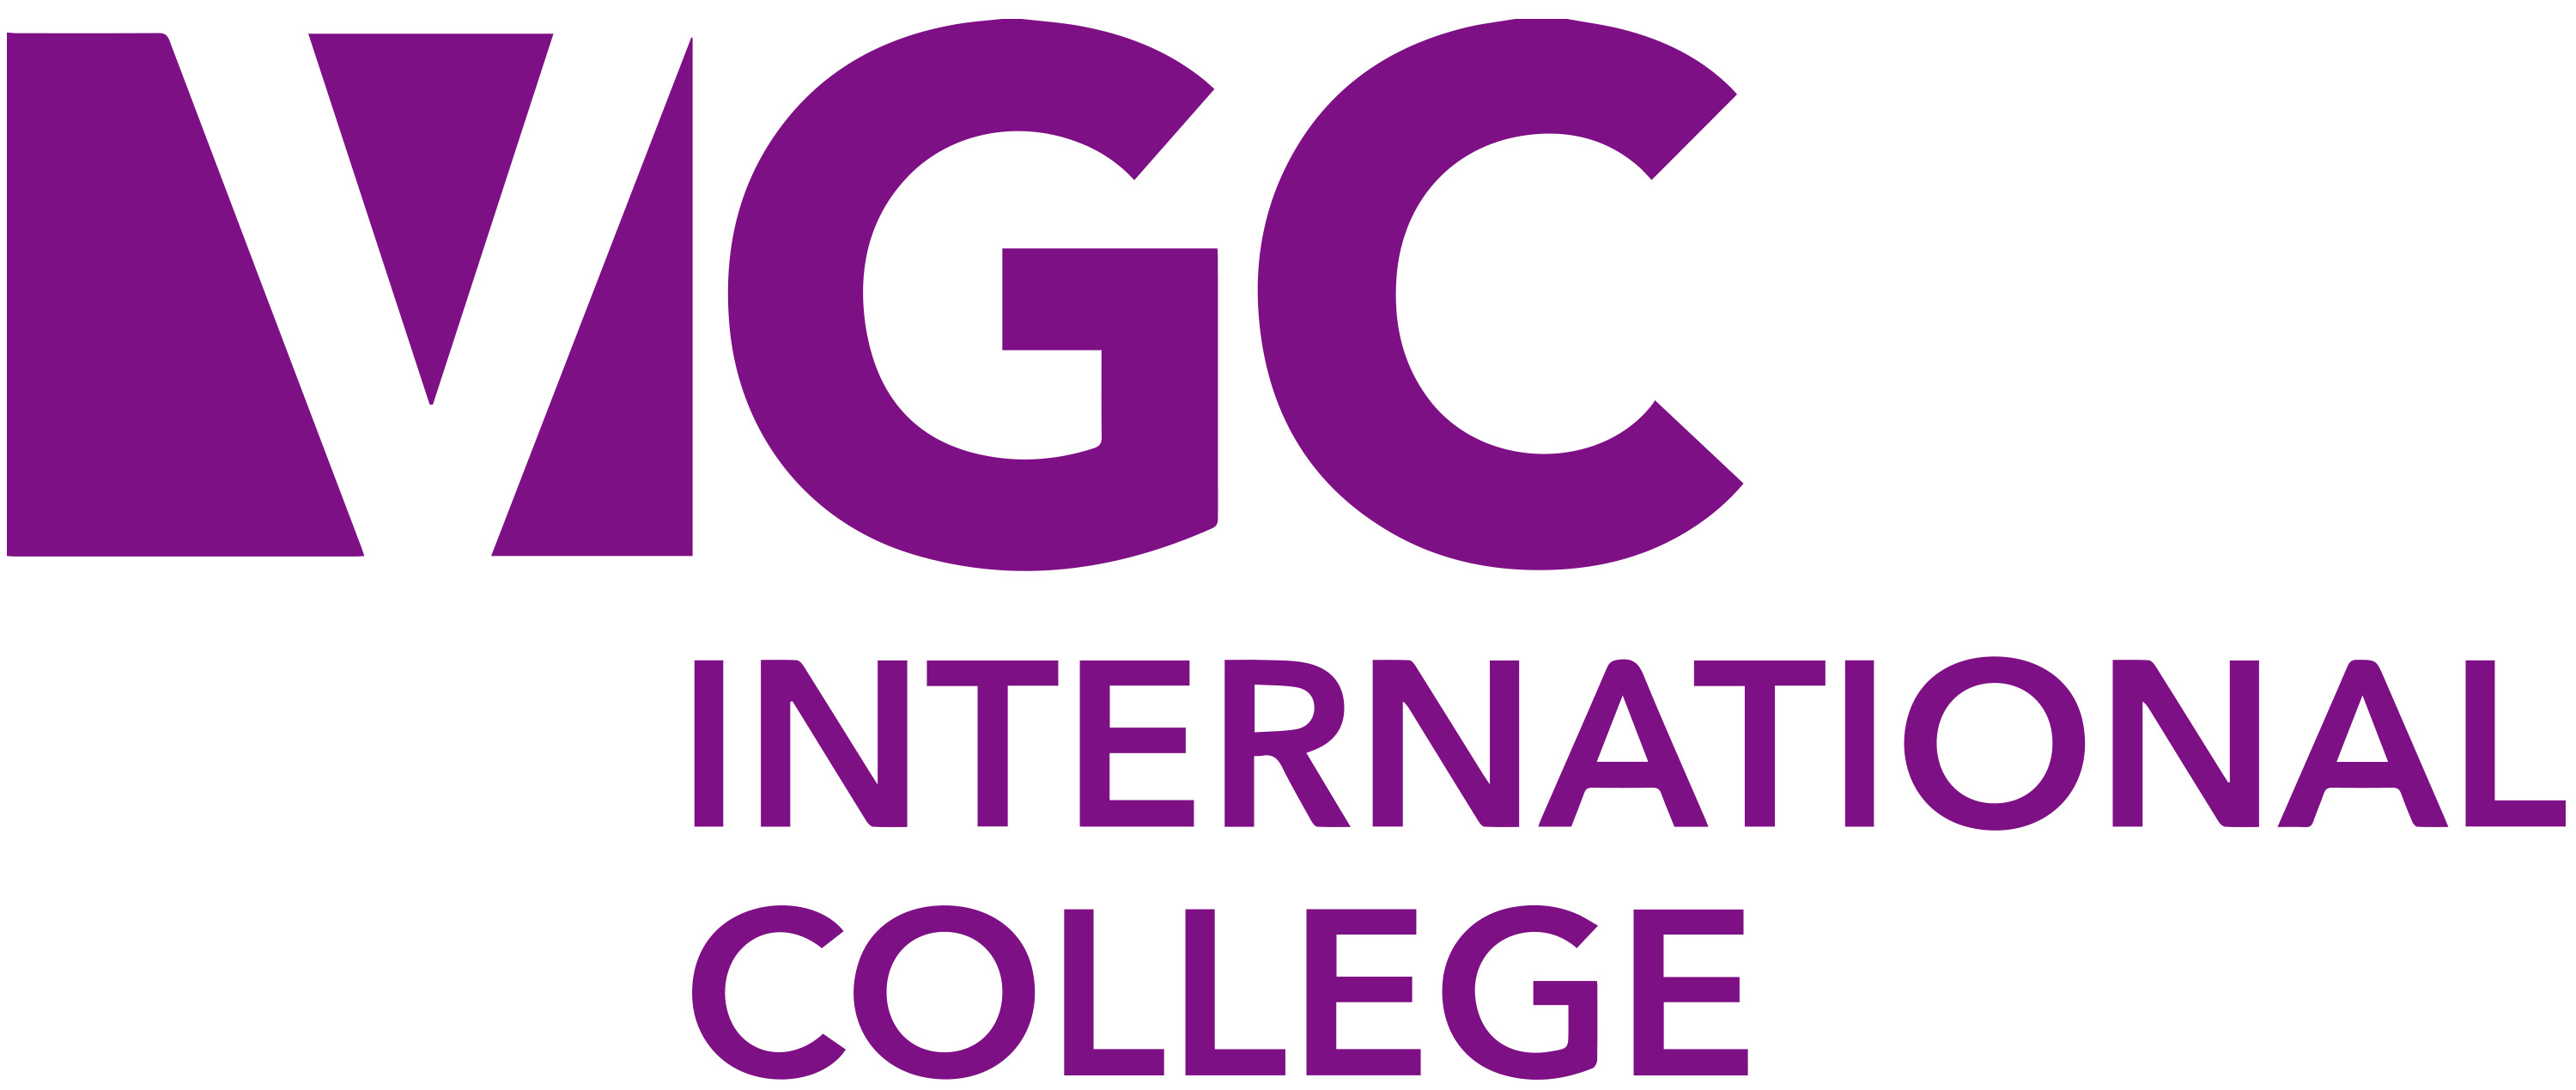 VGC International College - Logo_Purple_rgb